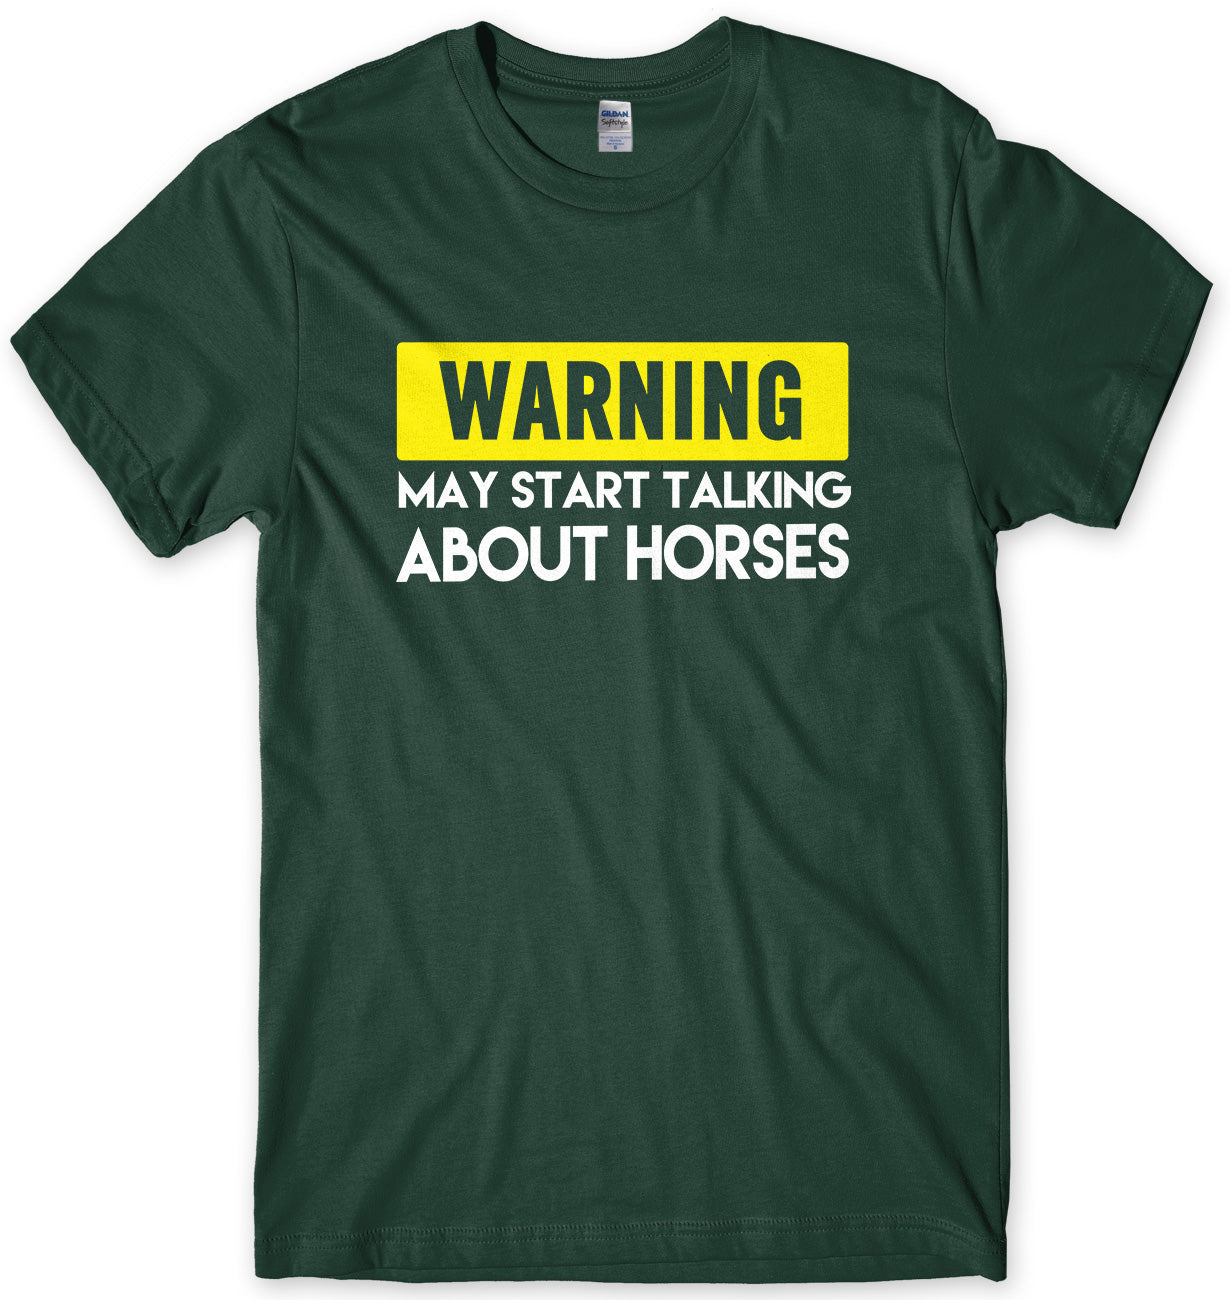 WARNING MAY START TALKING ABOUT HORSES MENS FUNNY SLOGAN UNISEX T-SHIRT